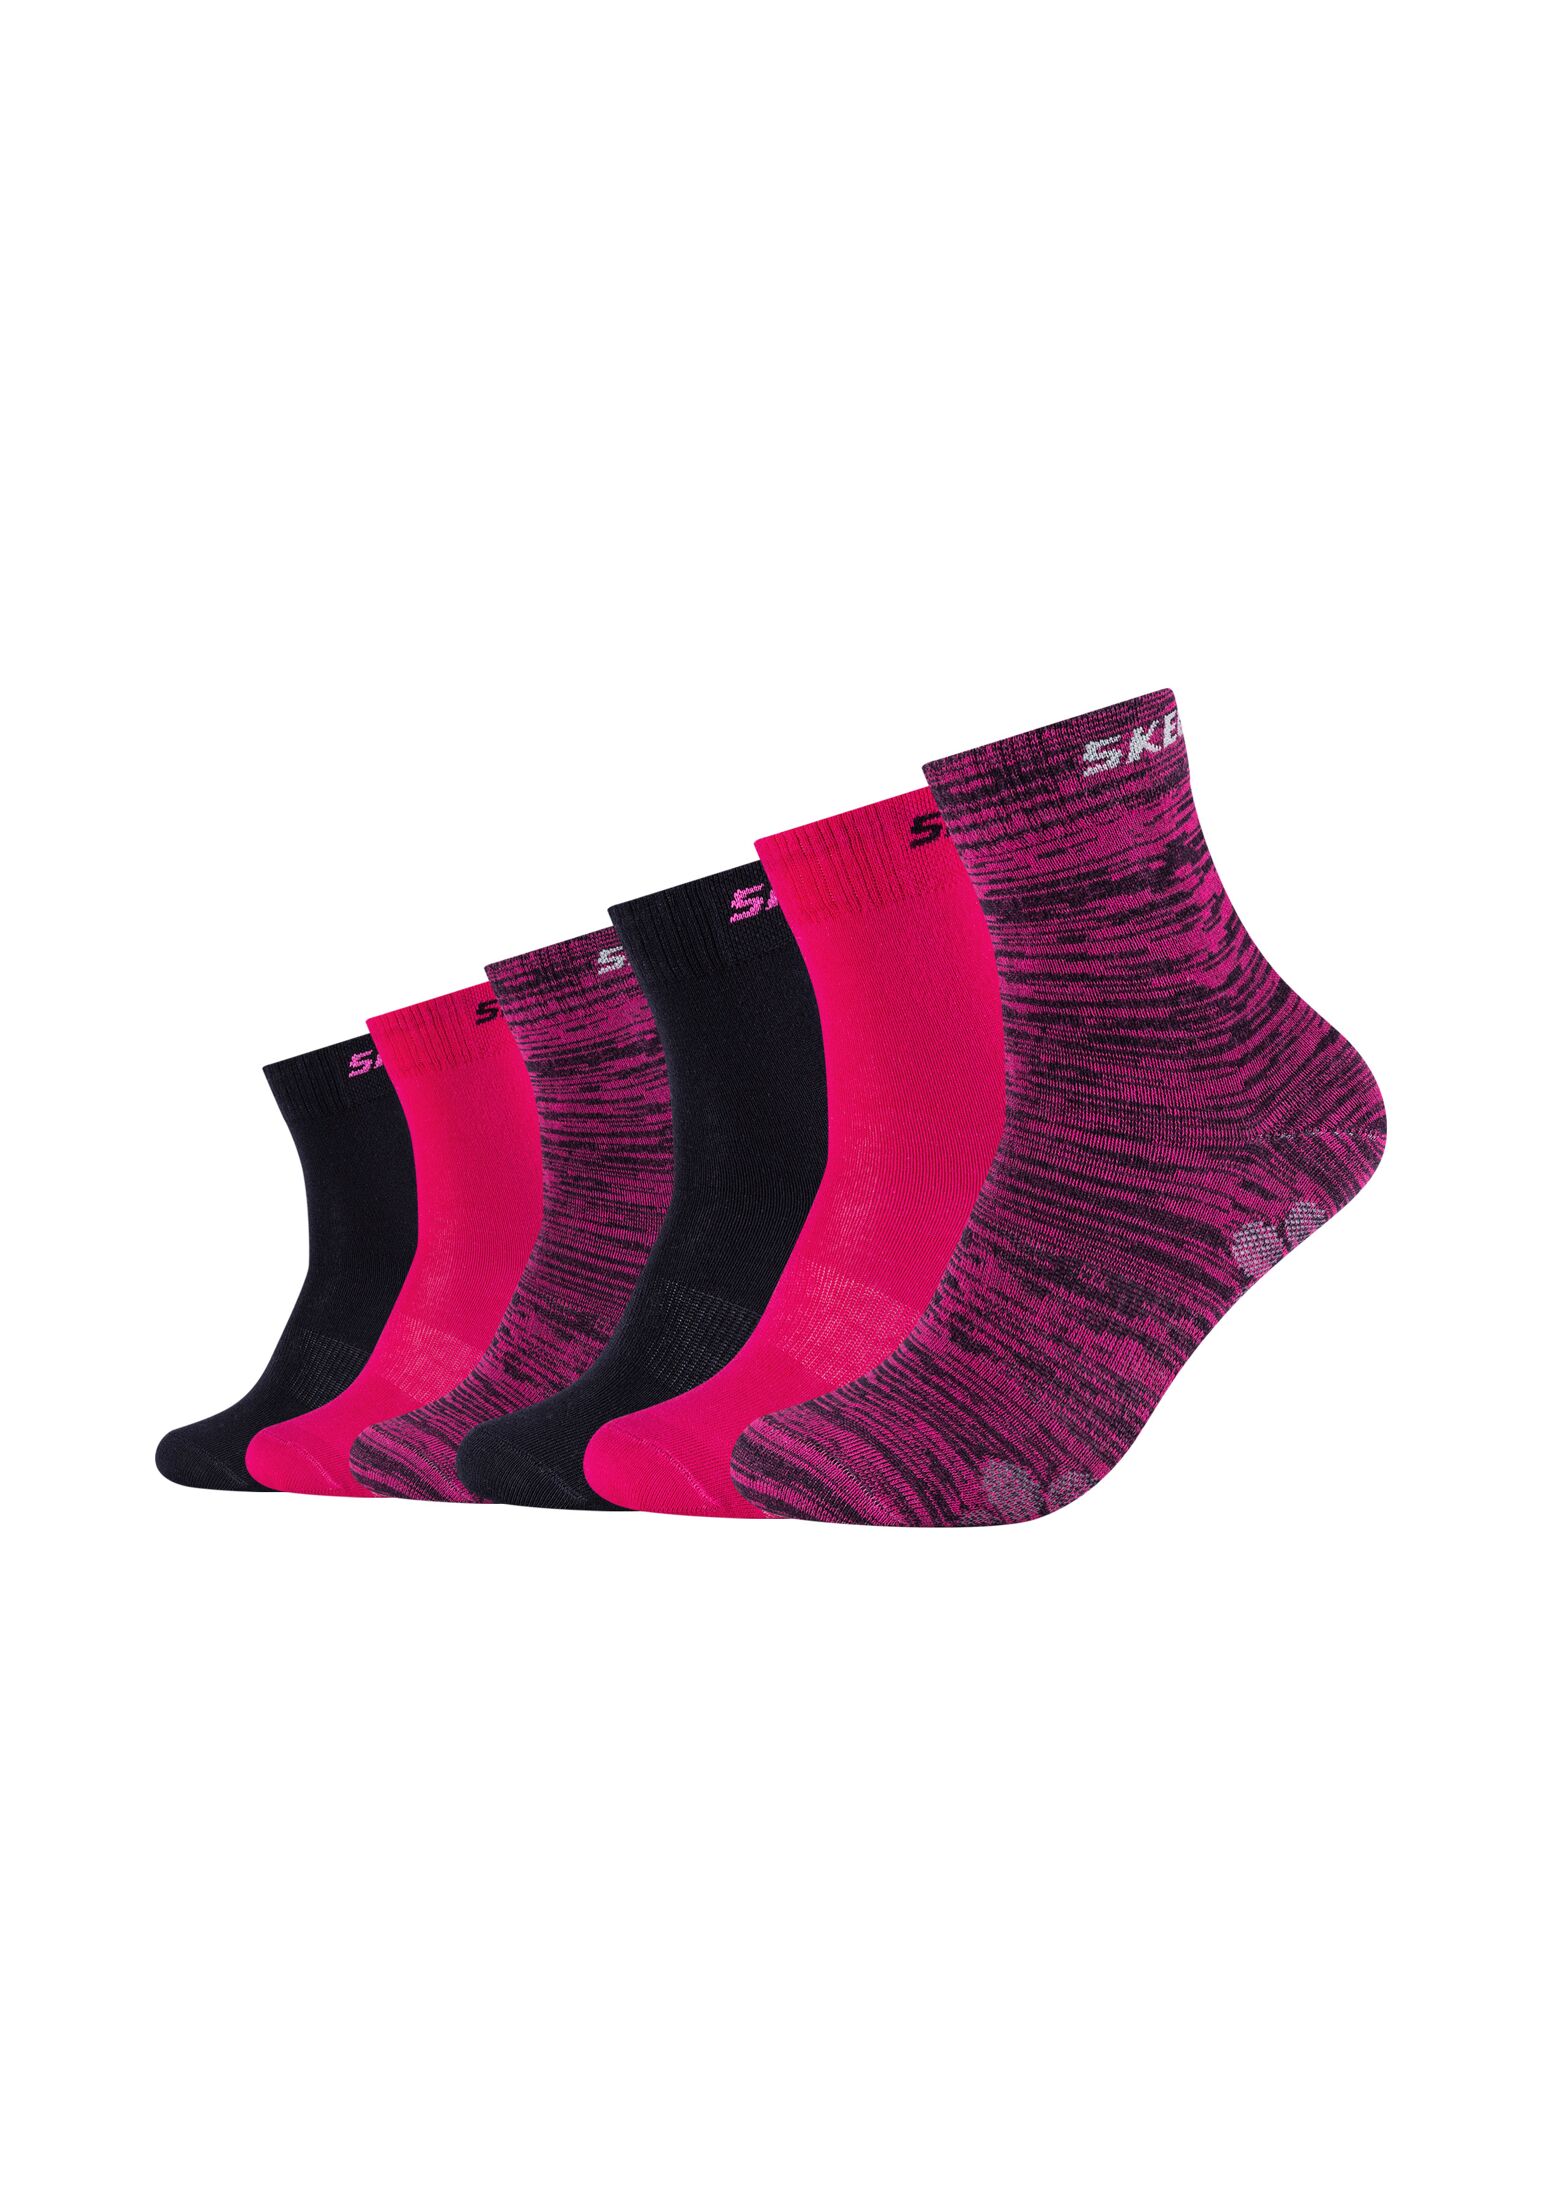 Носки Skechers 6 шт mesh ventilation, цвет pink glow mouliné носки skechers sneaker 6 шт mesh ventilation цвет pink glow mix